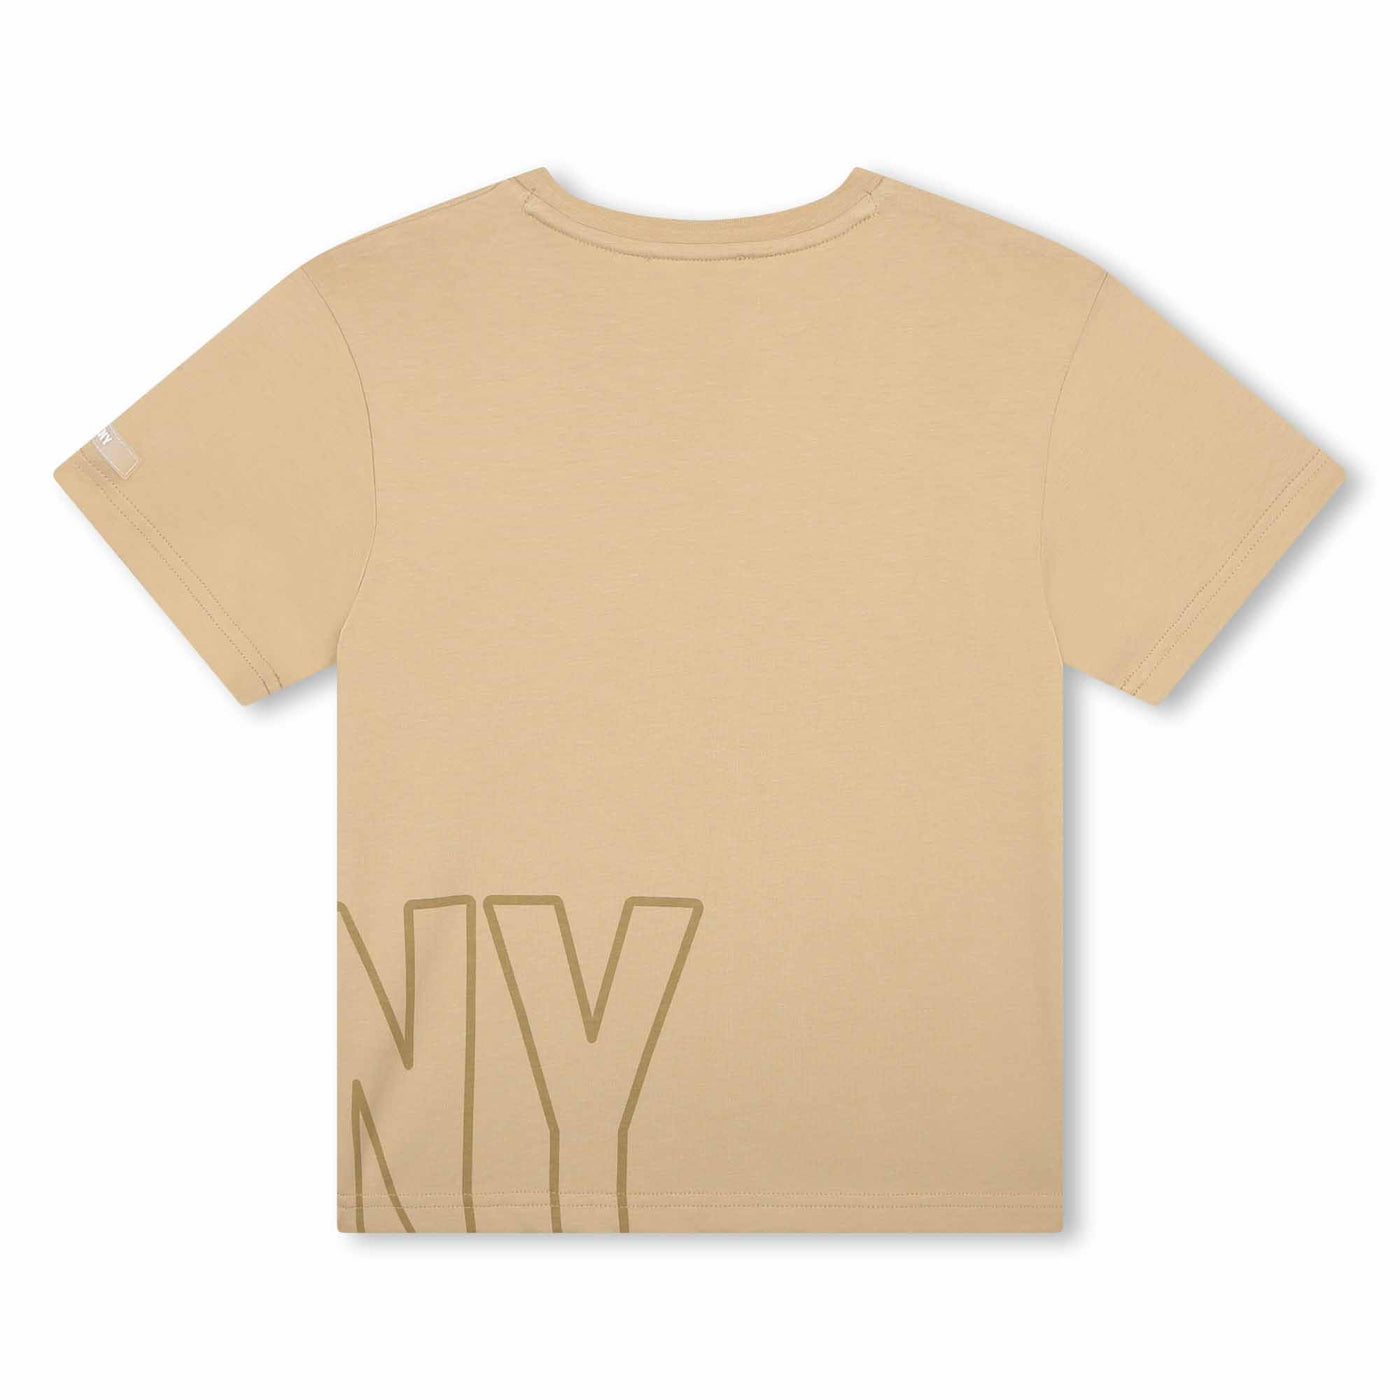 DKNY KIDS Printed T-shirt